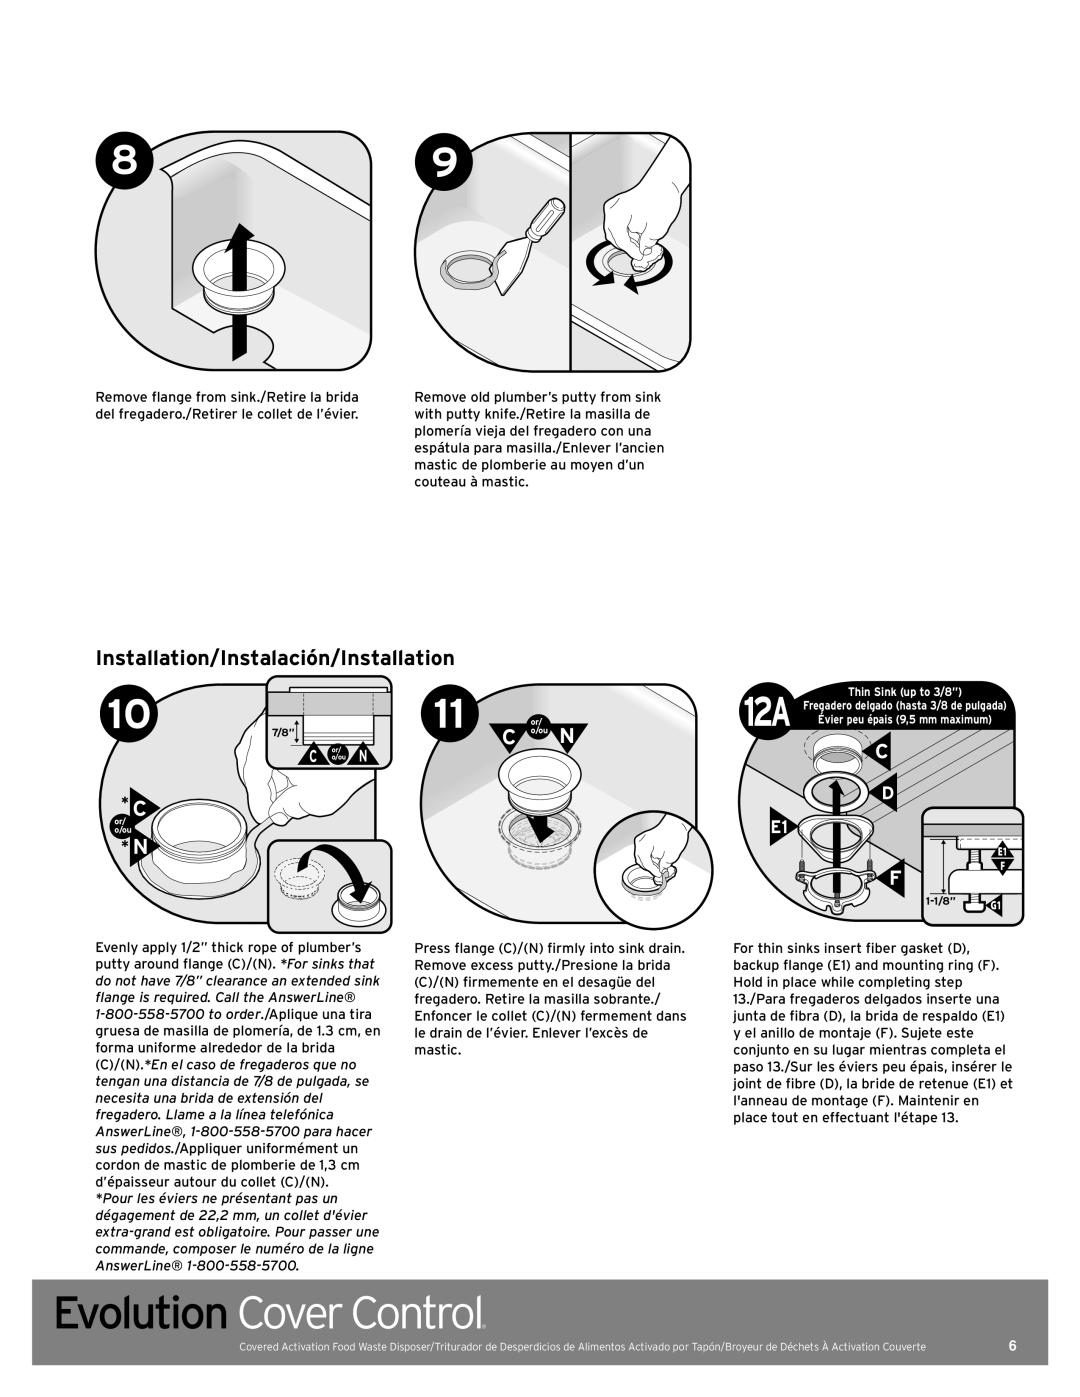 InSinkErator Evolution Series manual Installation/Instalación/Installation, D E1, Evolution Cover Control 